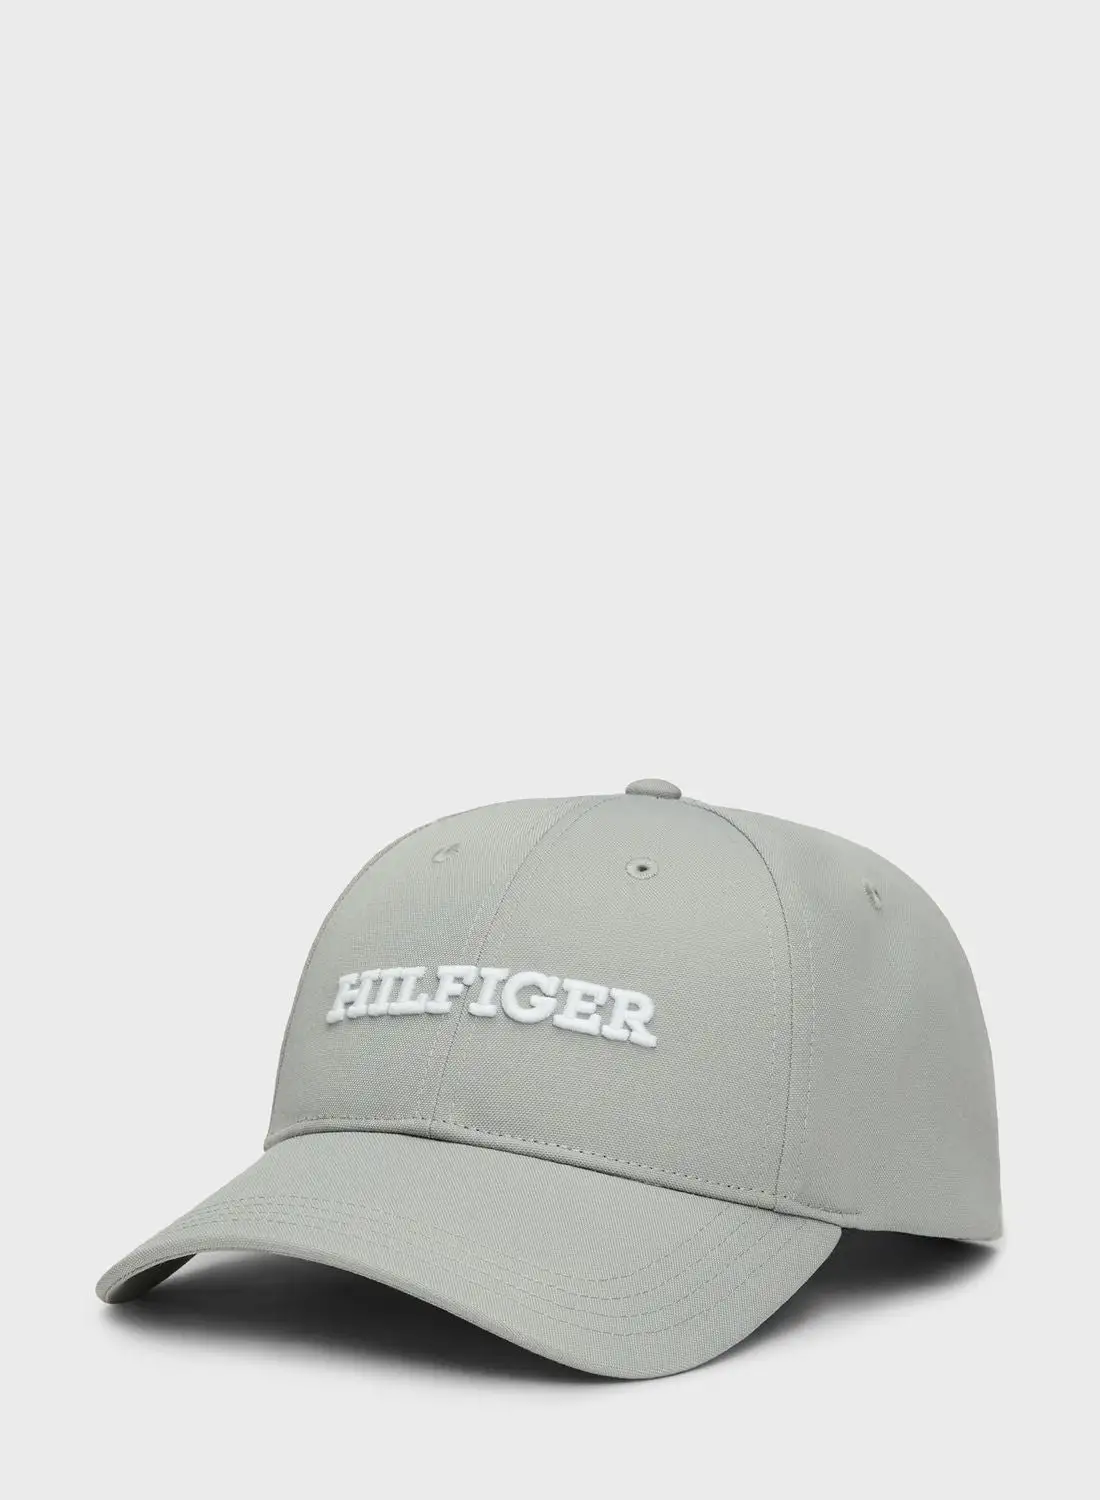 TOMMY HILFIGER Logo Curved Peak Caps